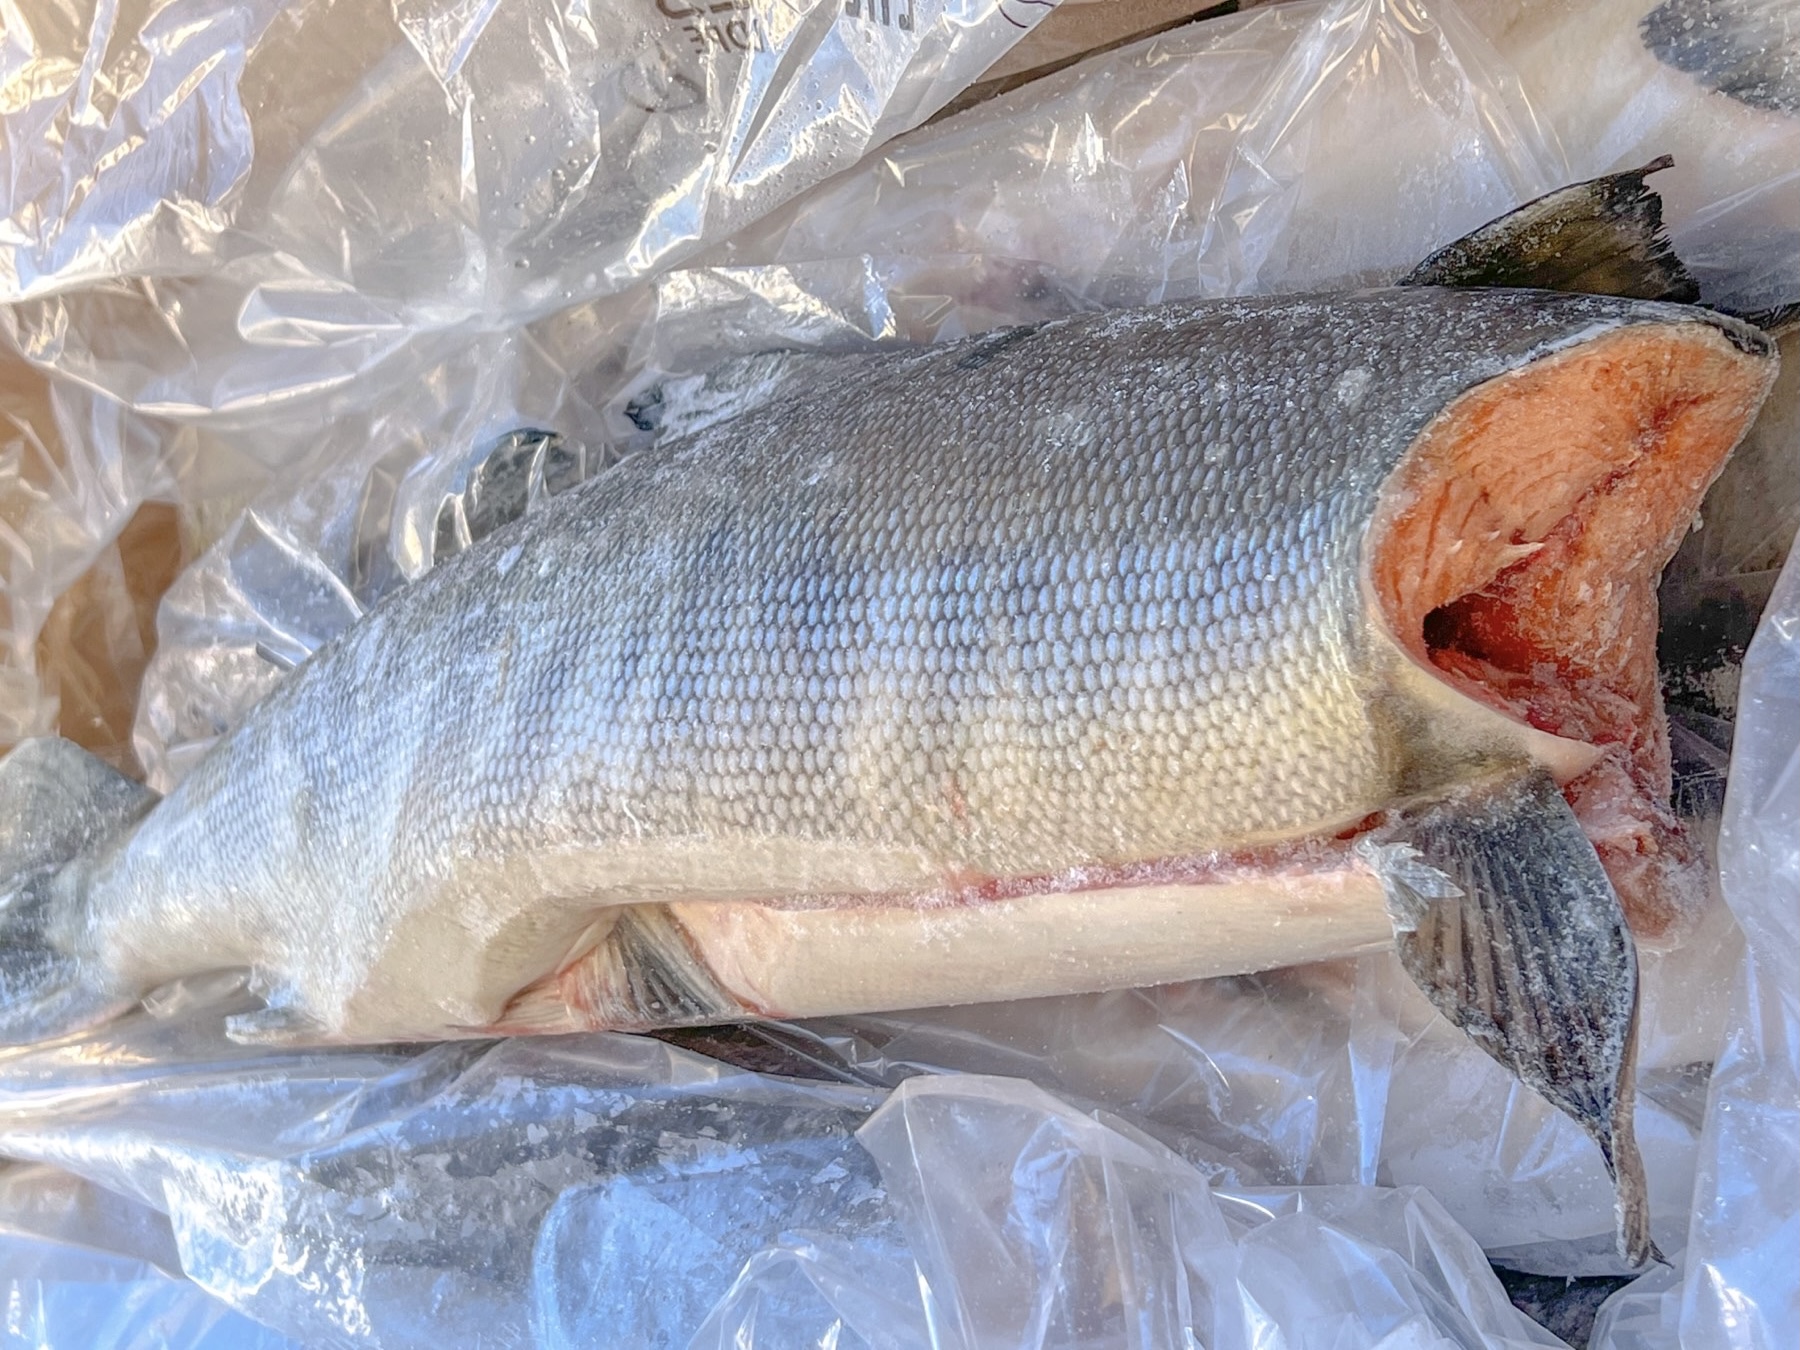 Рыба серебрянка: описание, особенности, характеристики